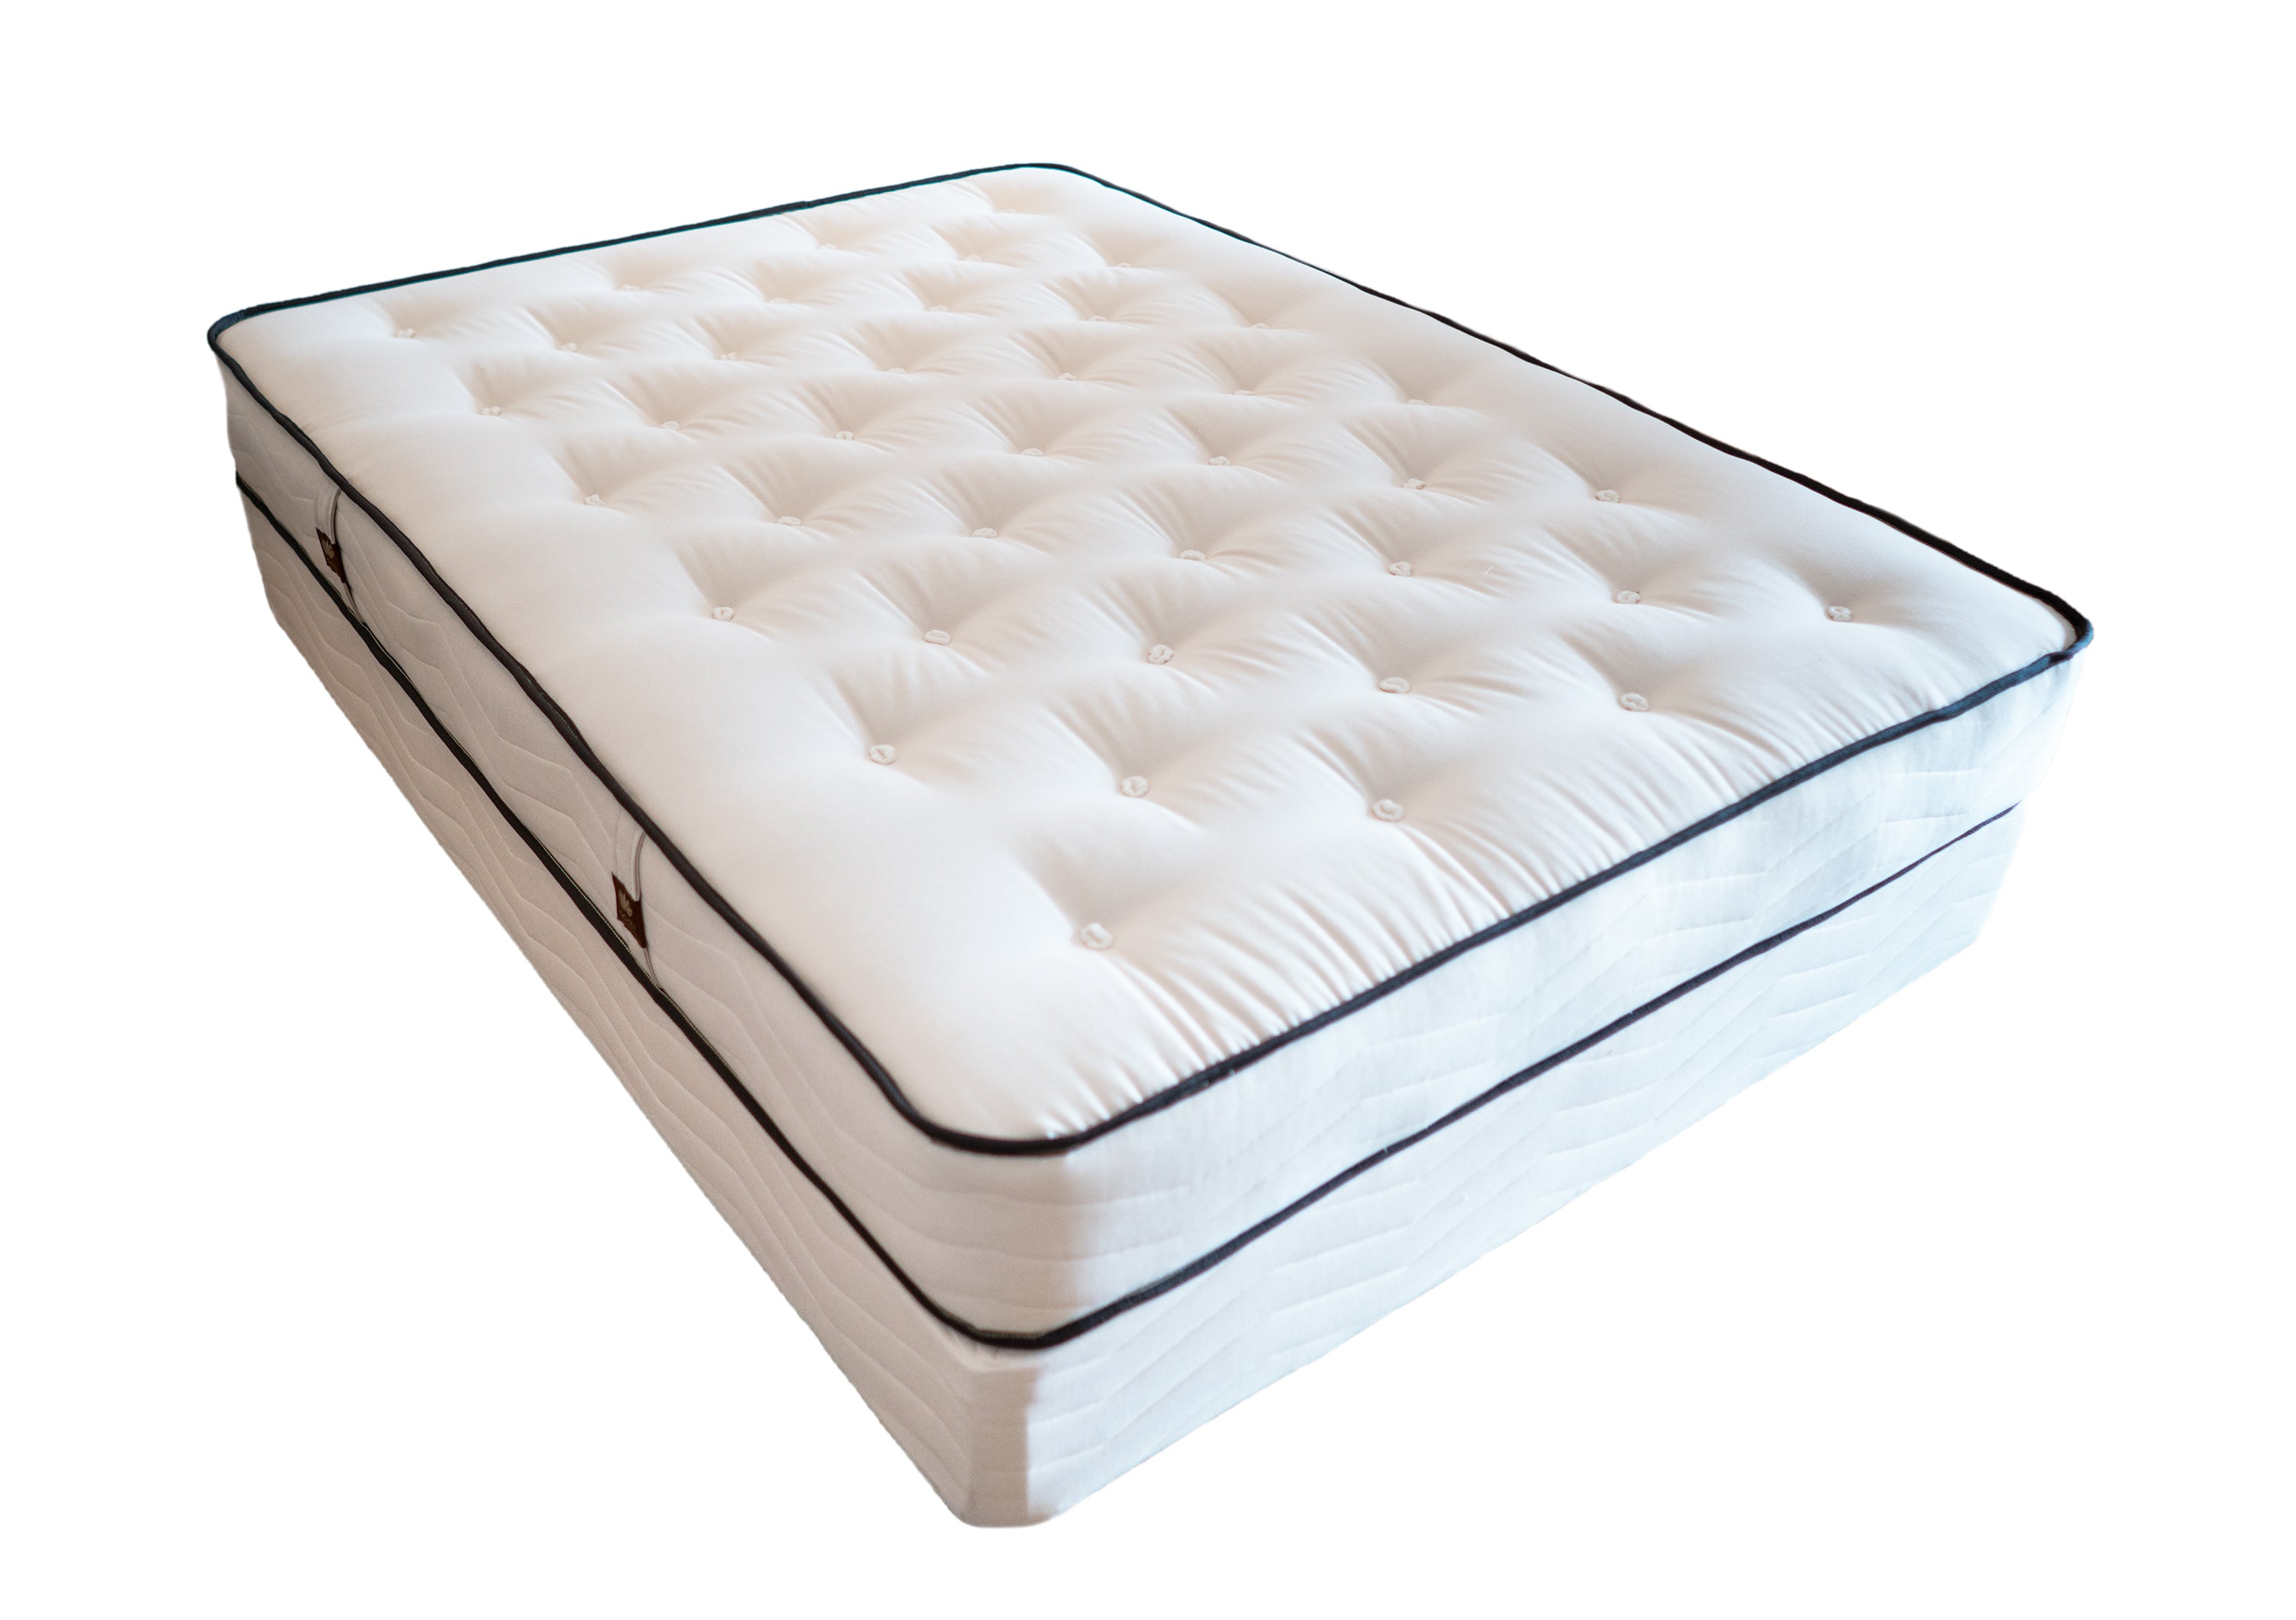 traditional innerspring mattress no foam